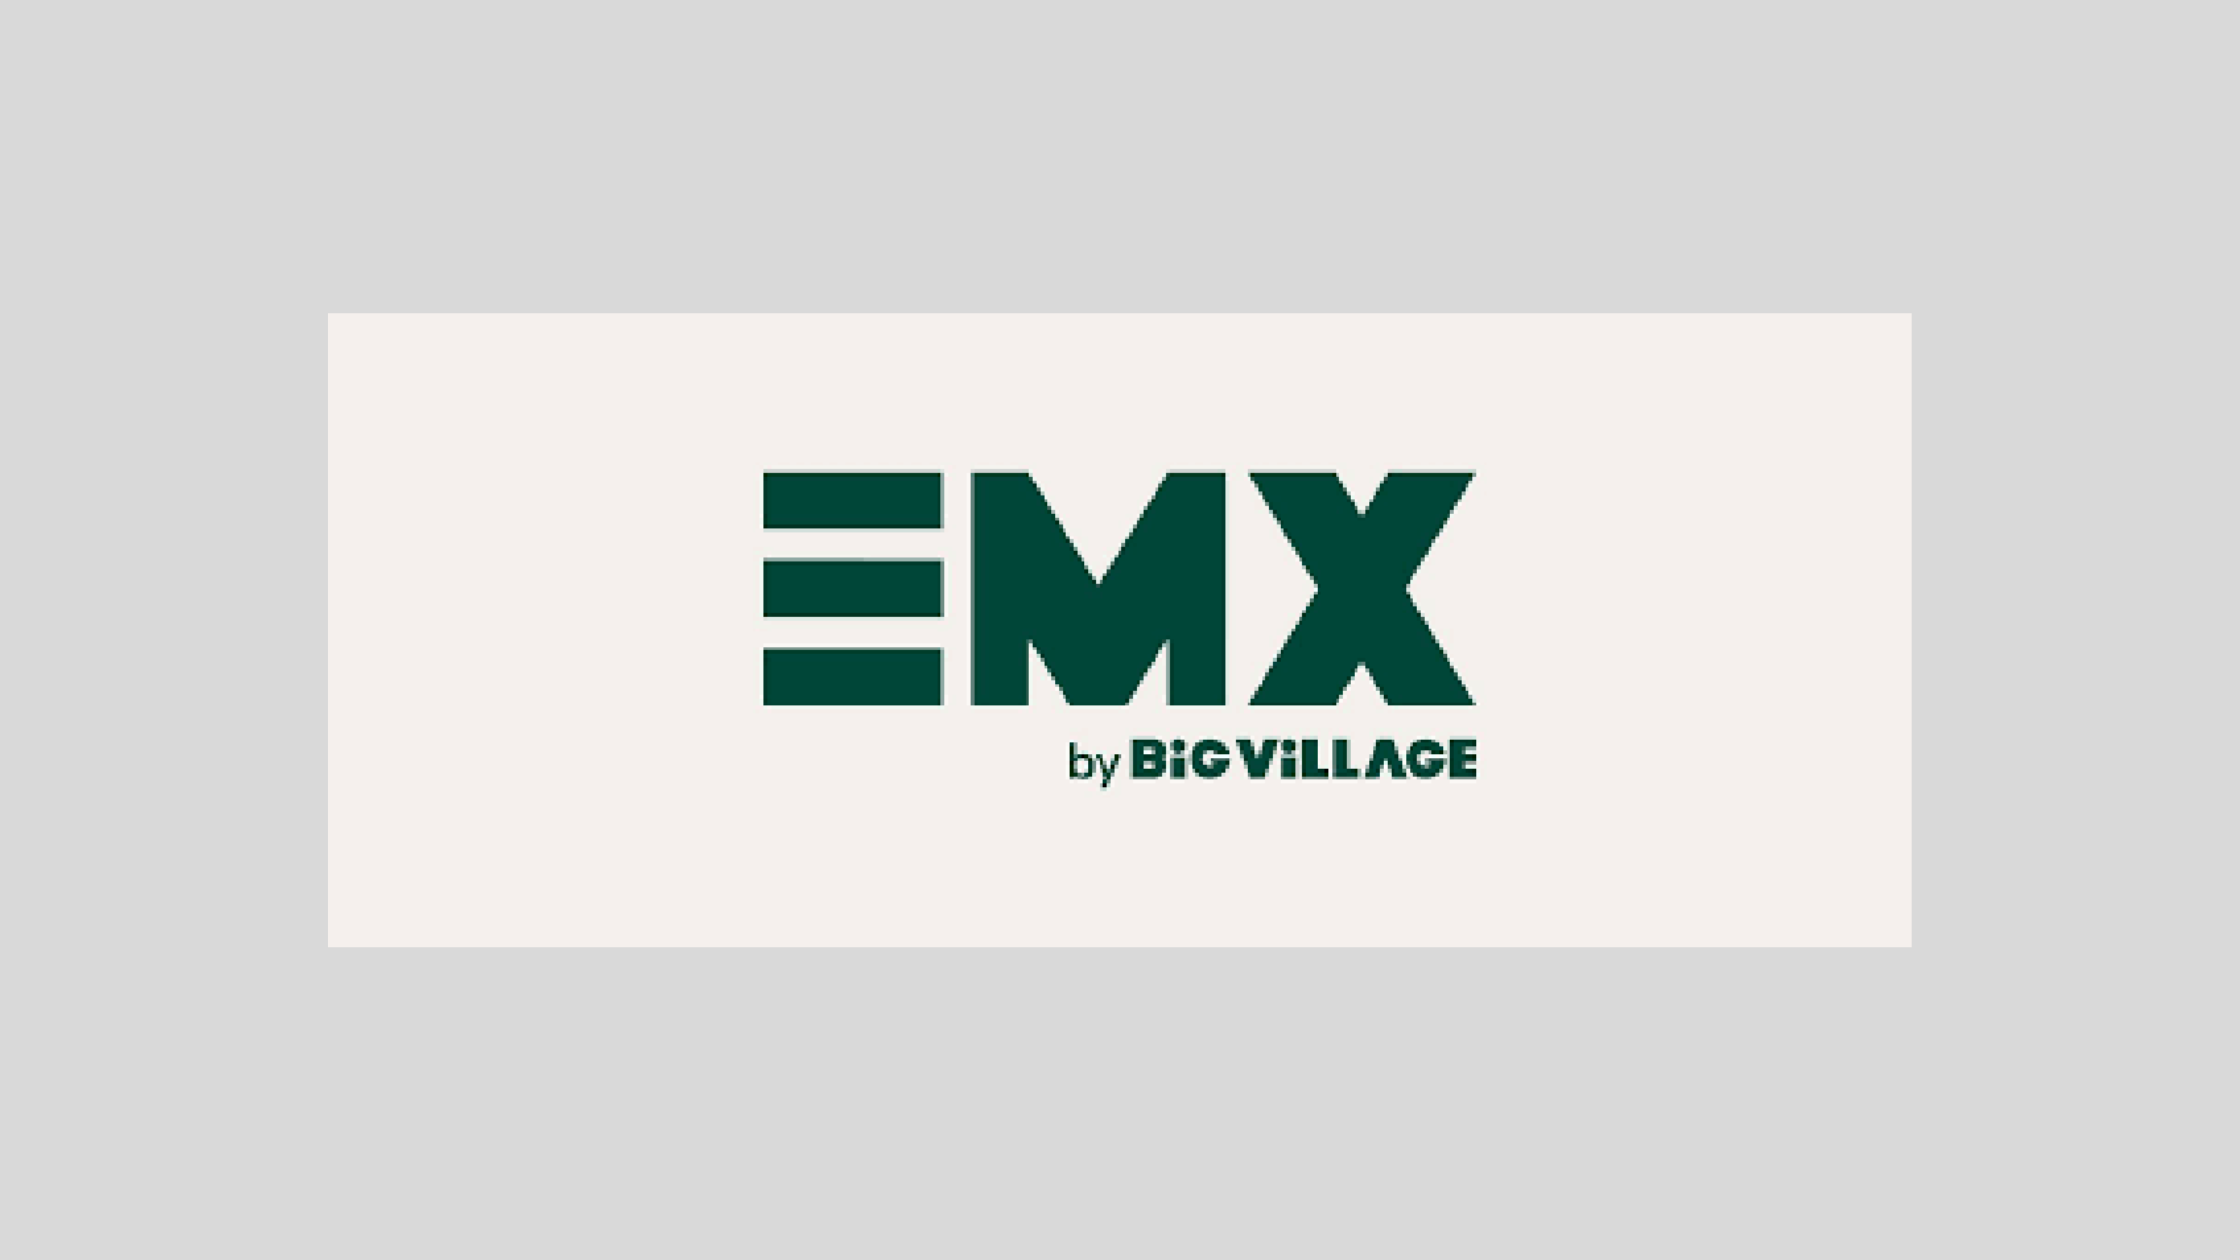 EMX and Big Village